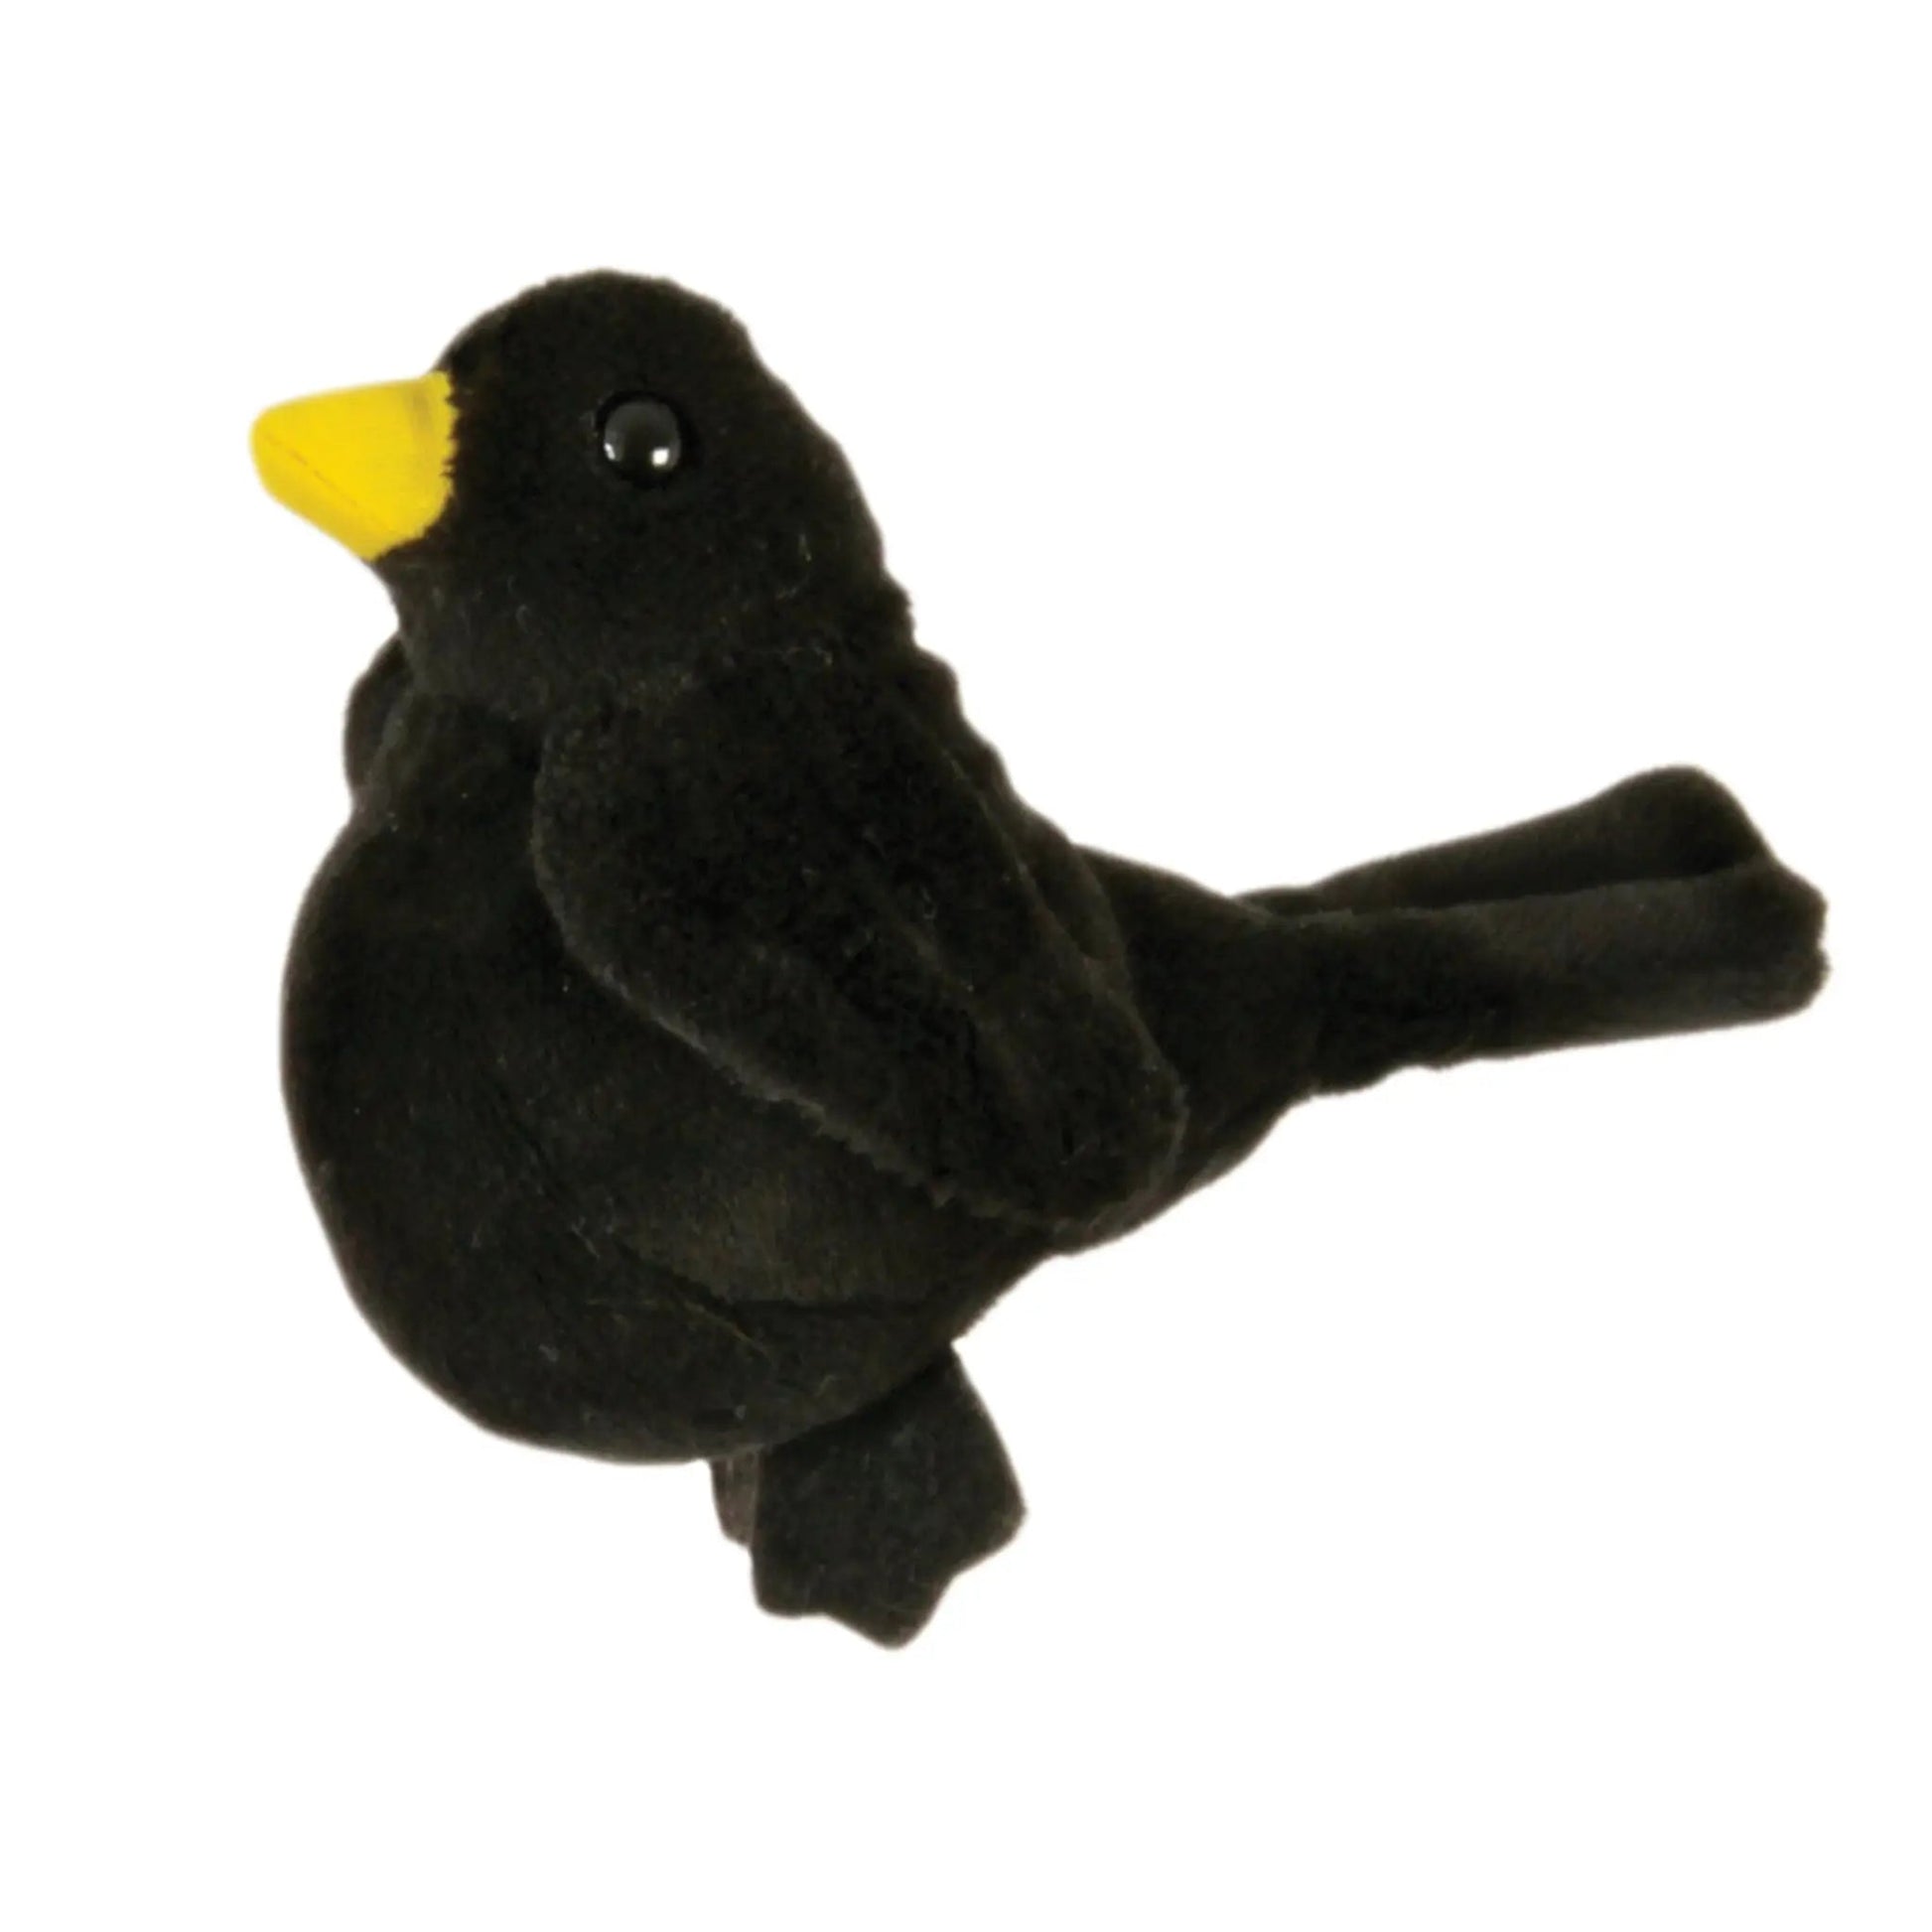 Blackbird Finger Puppet - The Puppet Company - The Forgotten Toy Shop